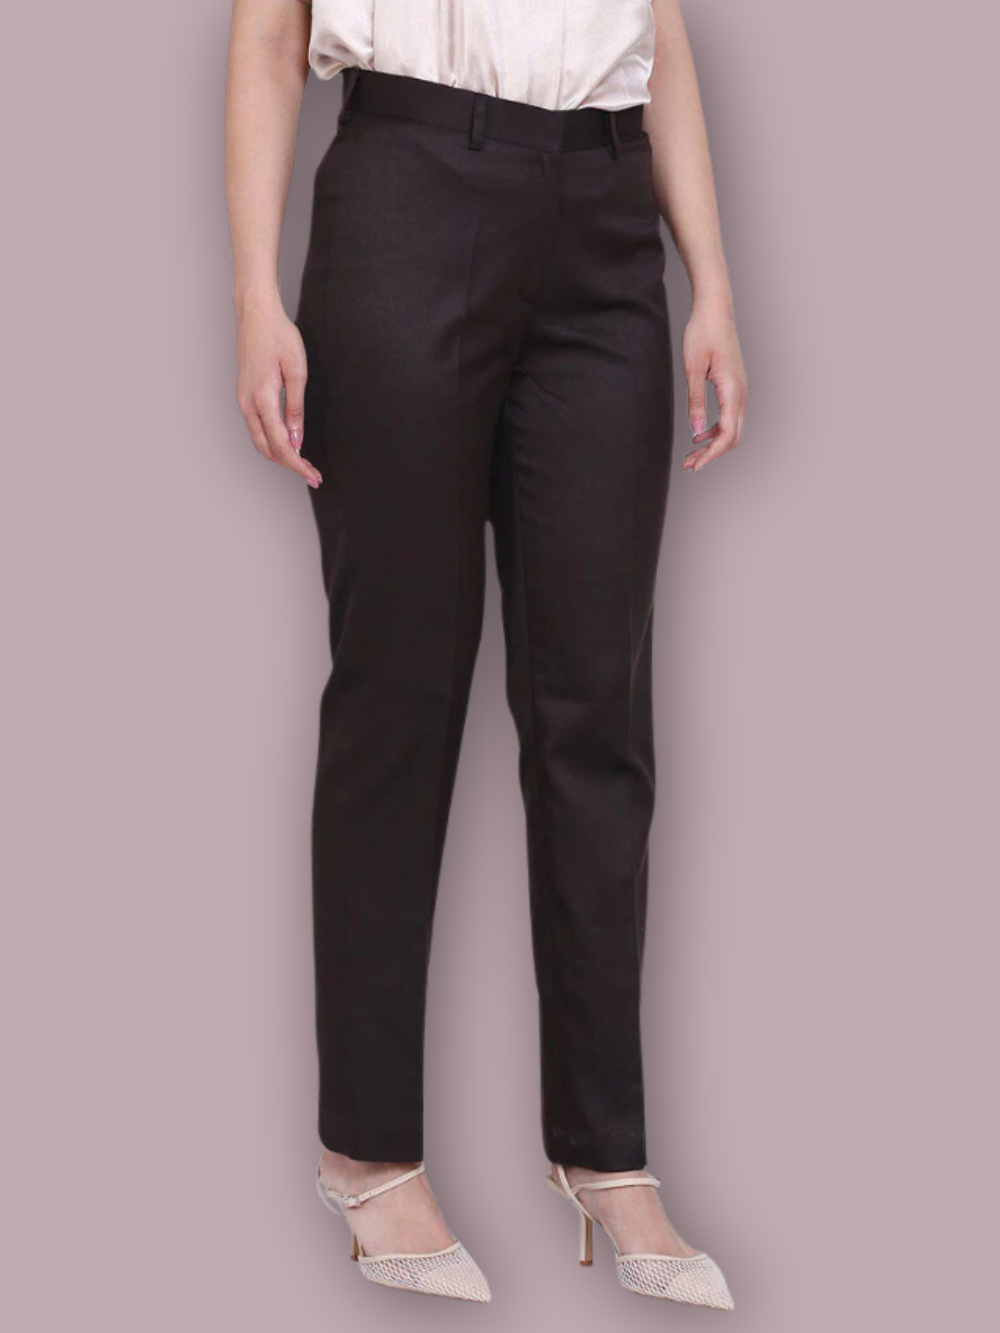 Buy Multi-color Premium Silk Pants, Premium Silk Pants for Women, Silk  Trousers, Slim Pants, Regular and Officewear Pants and Trousers Online in  India 